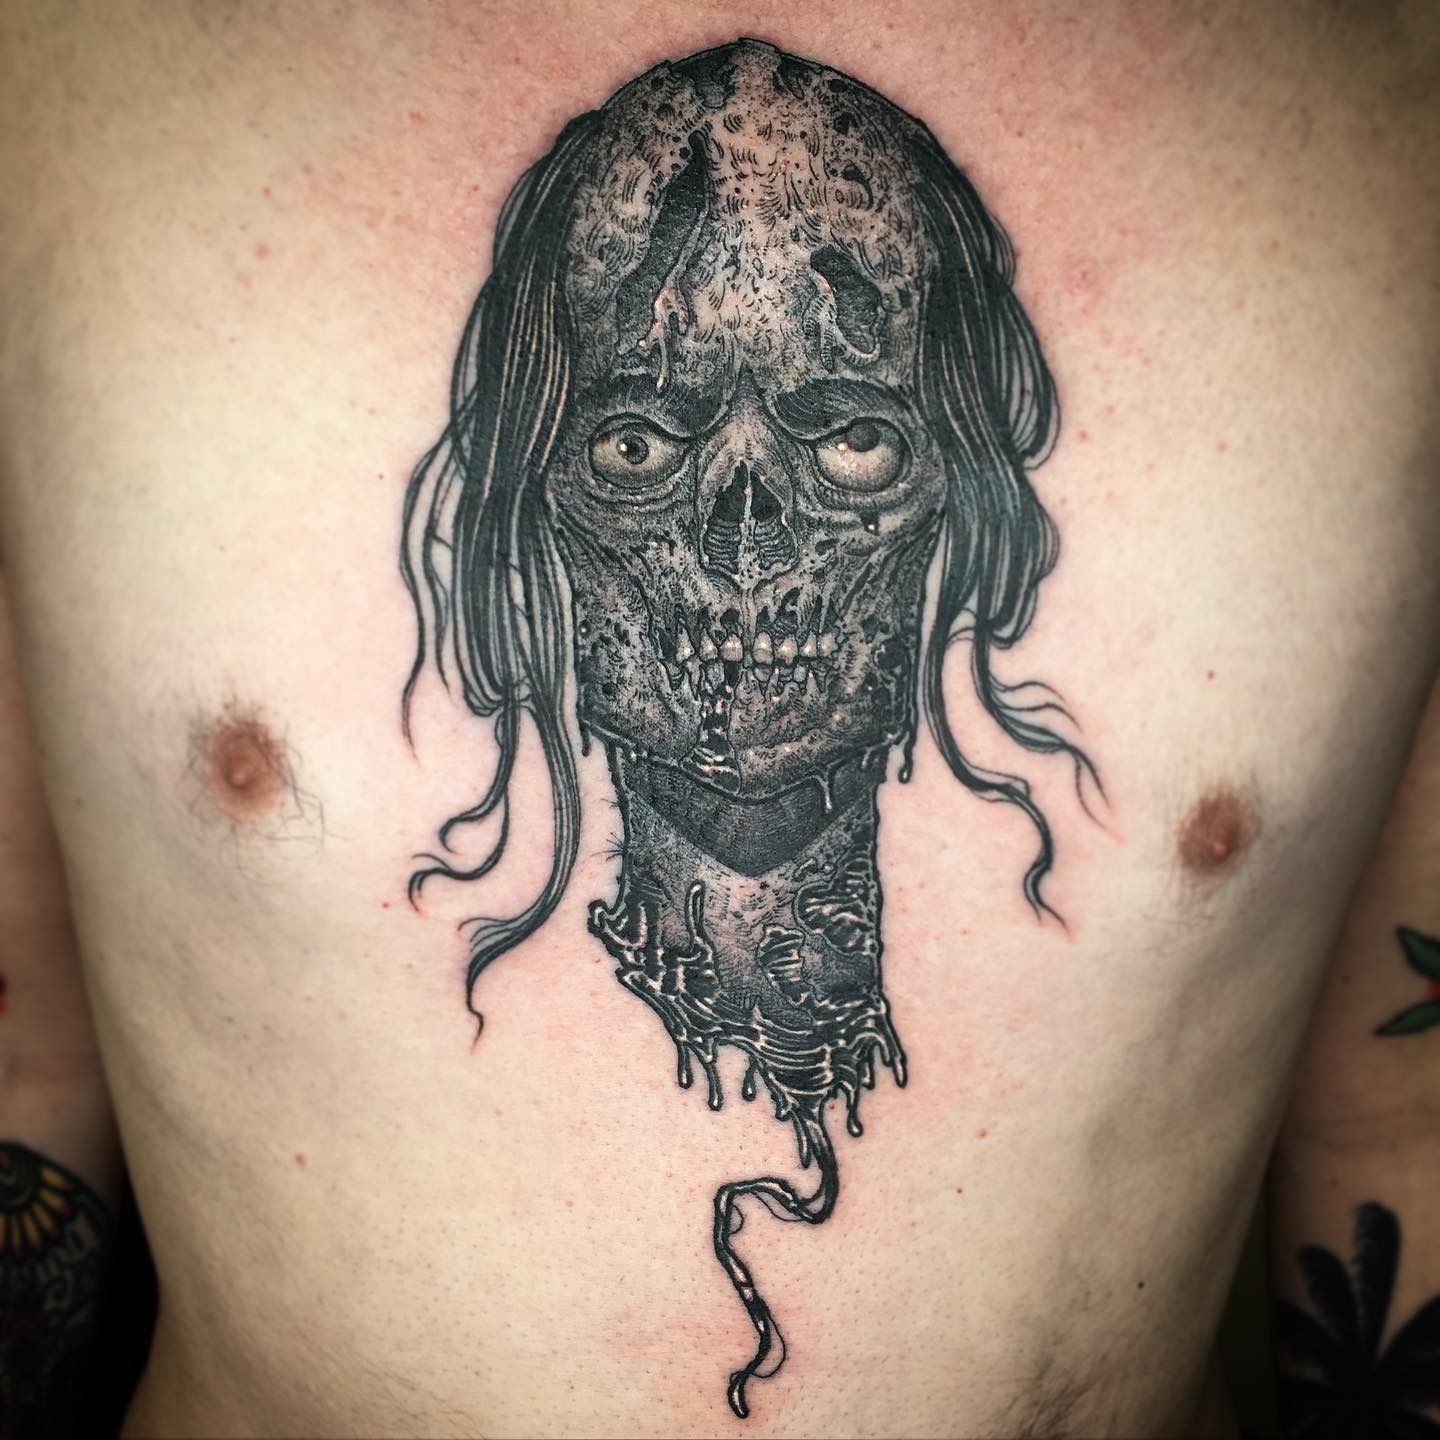 zombie gypsy head tattoo